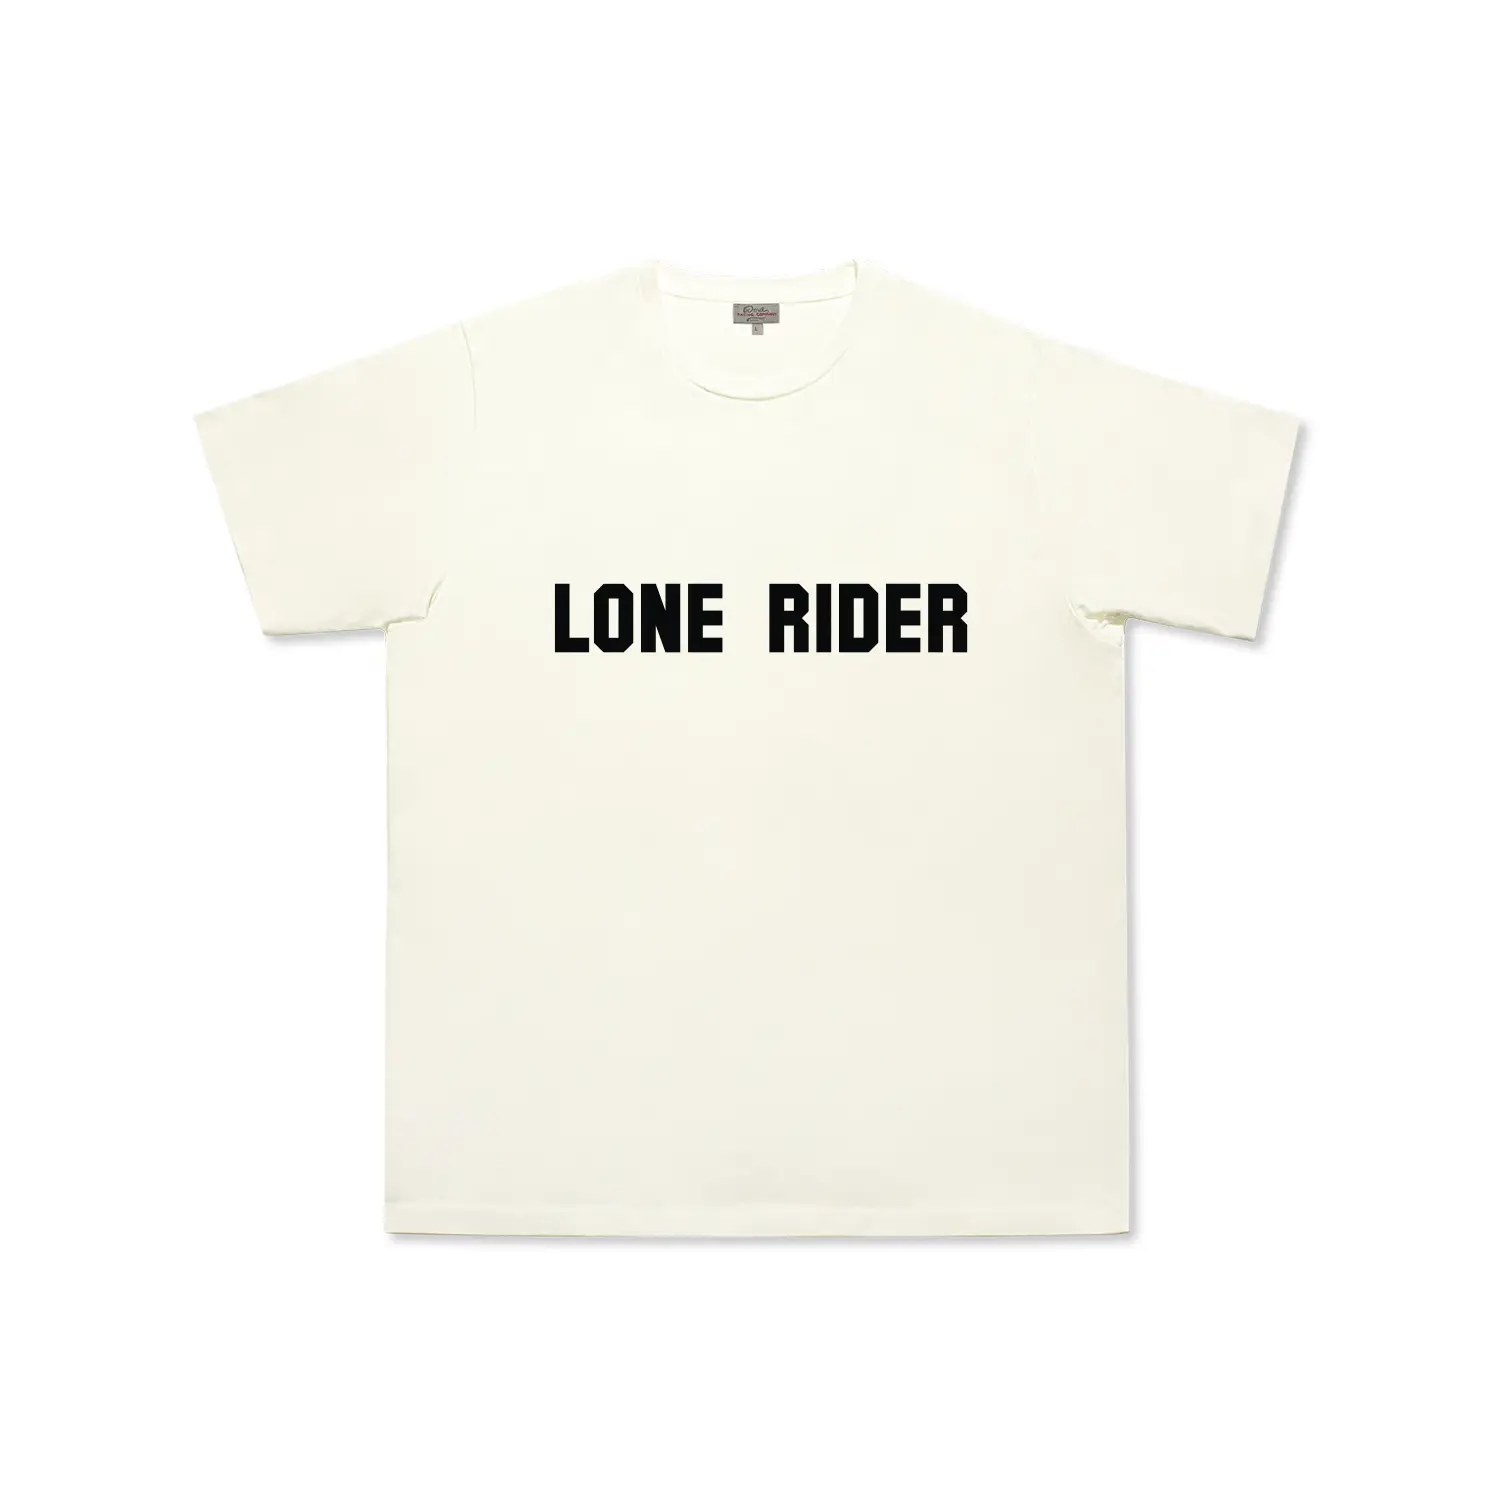 dmd.eu - LONE RIDER DMD – T-shirt Lone Rider – front